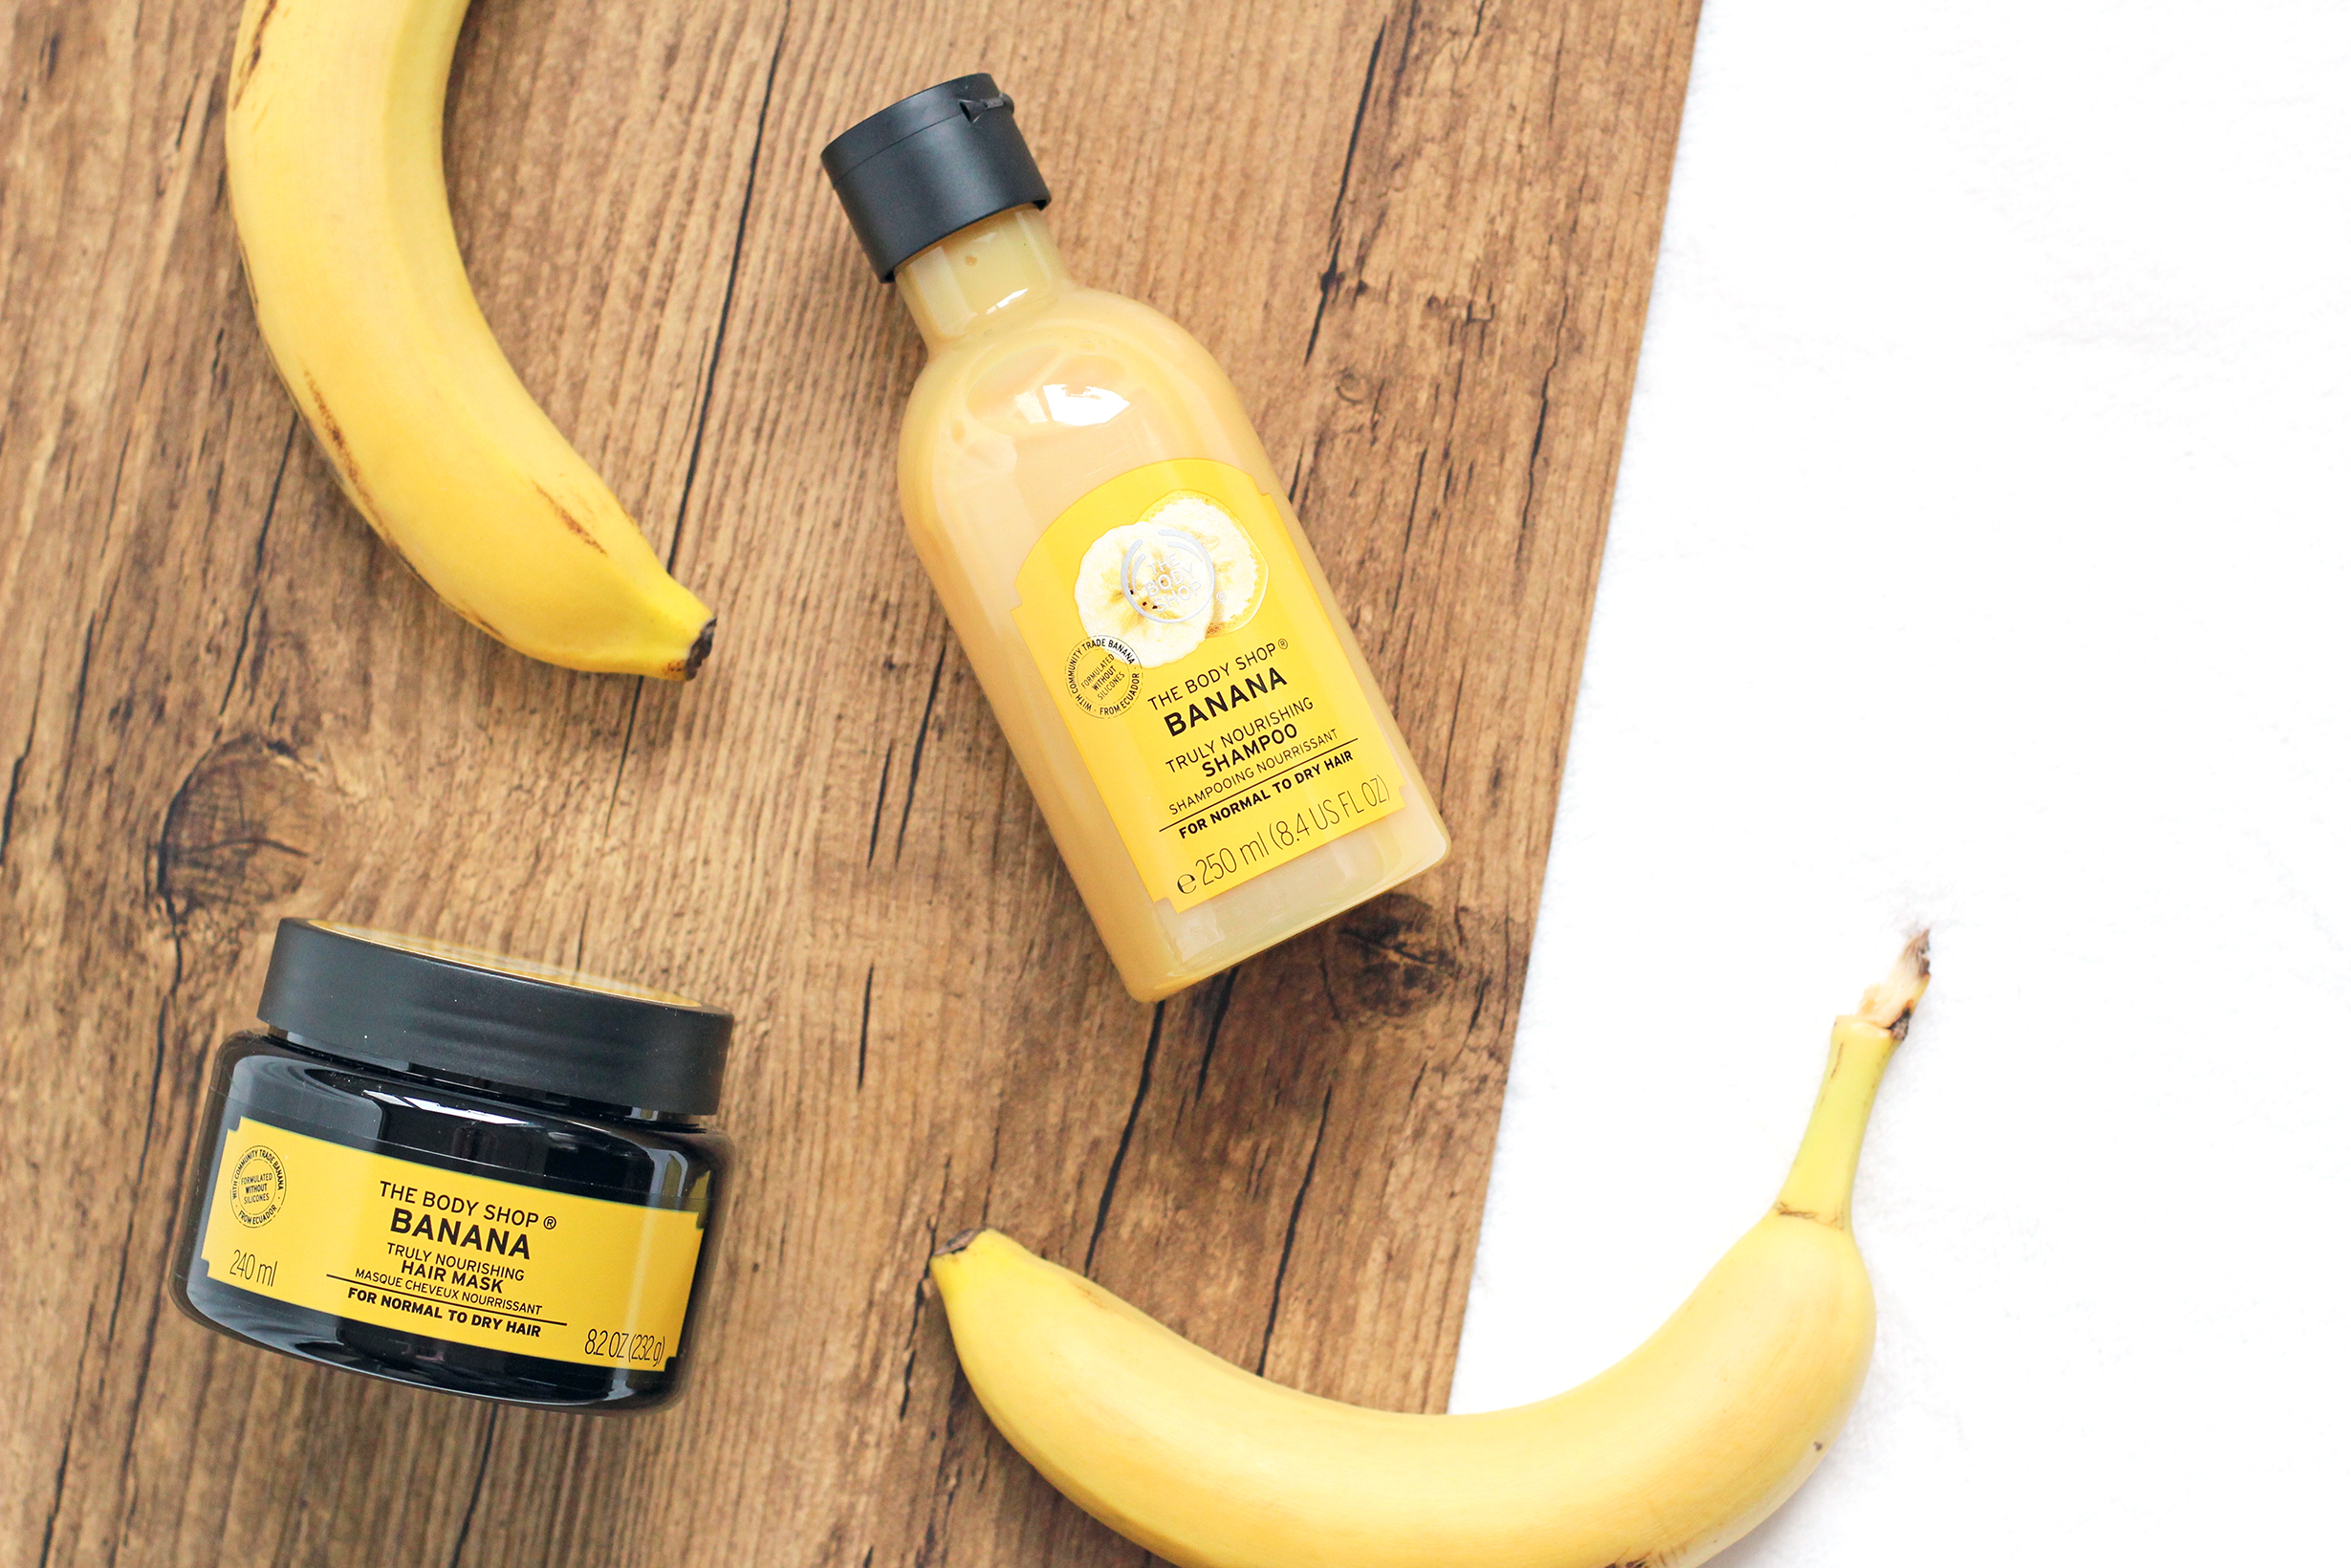 the body shop banana shampoo hair mask review